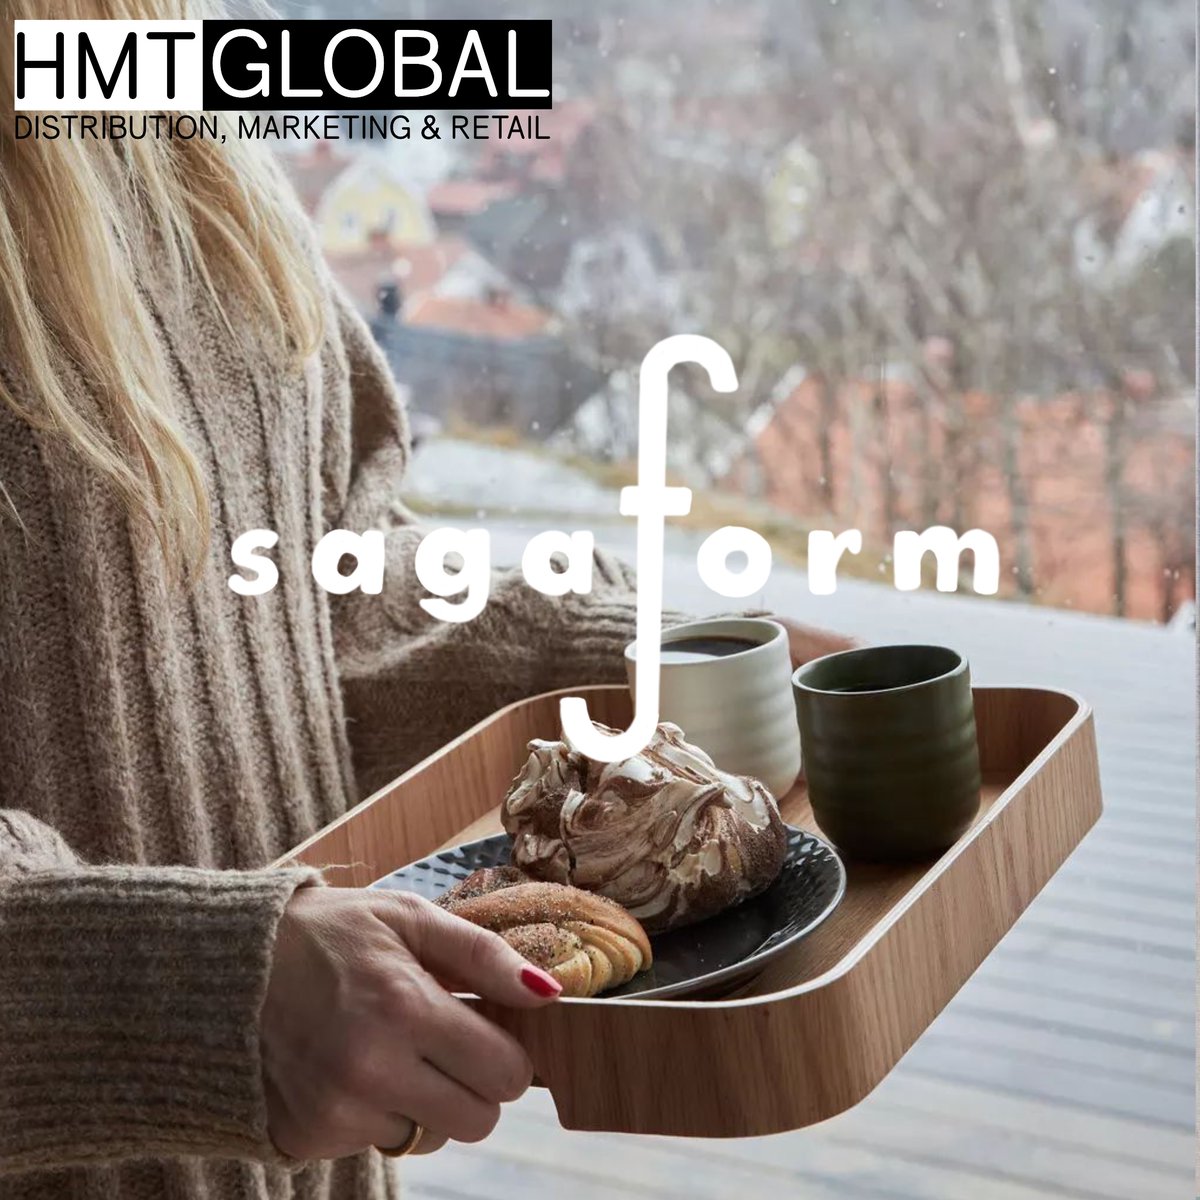 Elevate your dining experience with Sagaform!
@sagaform
#HMTGlobal #Sagaform #HomeInspo #HomeInspiration #Lifestyle #HomeDecor #Home #Design #Dubai #UAE #GoodTimesOnly #FeelingGood #HomeDecor #HomeInteriors #October #InteriorDesign